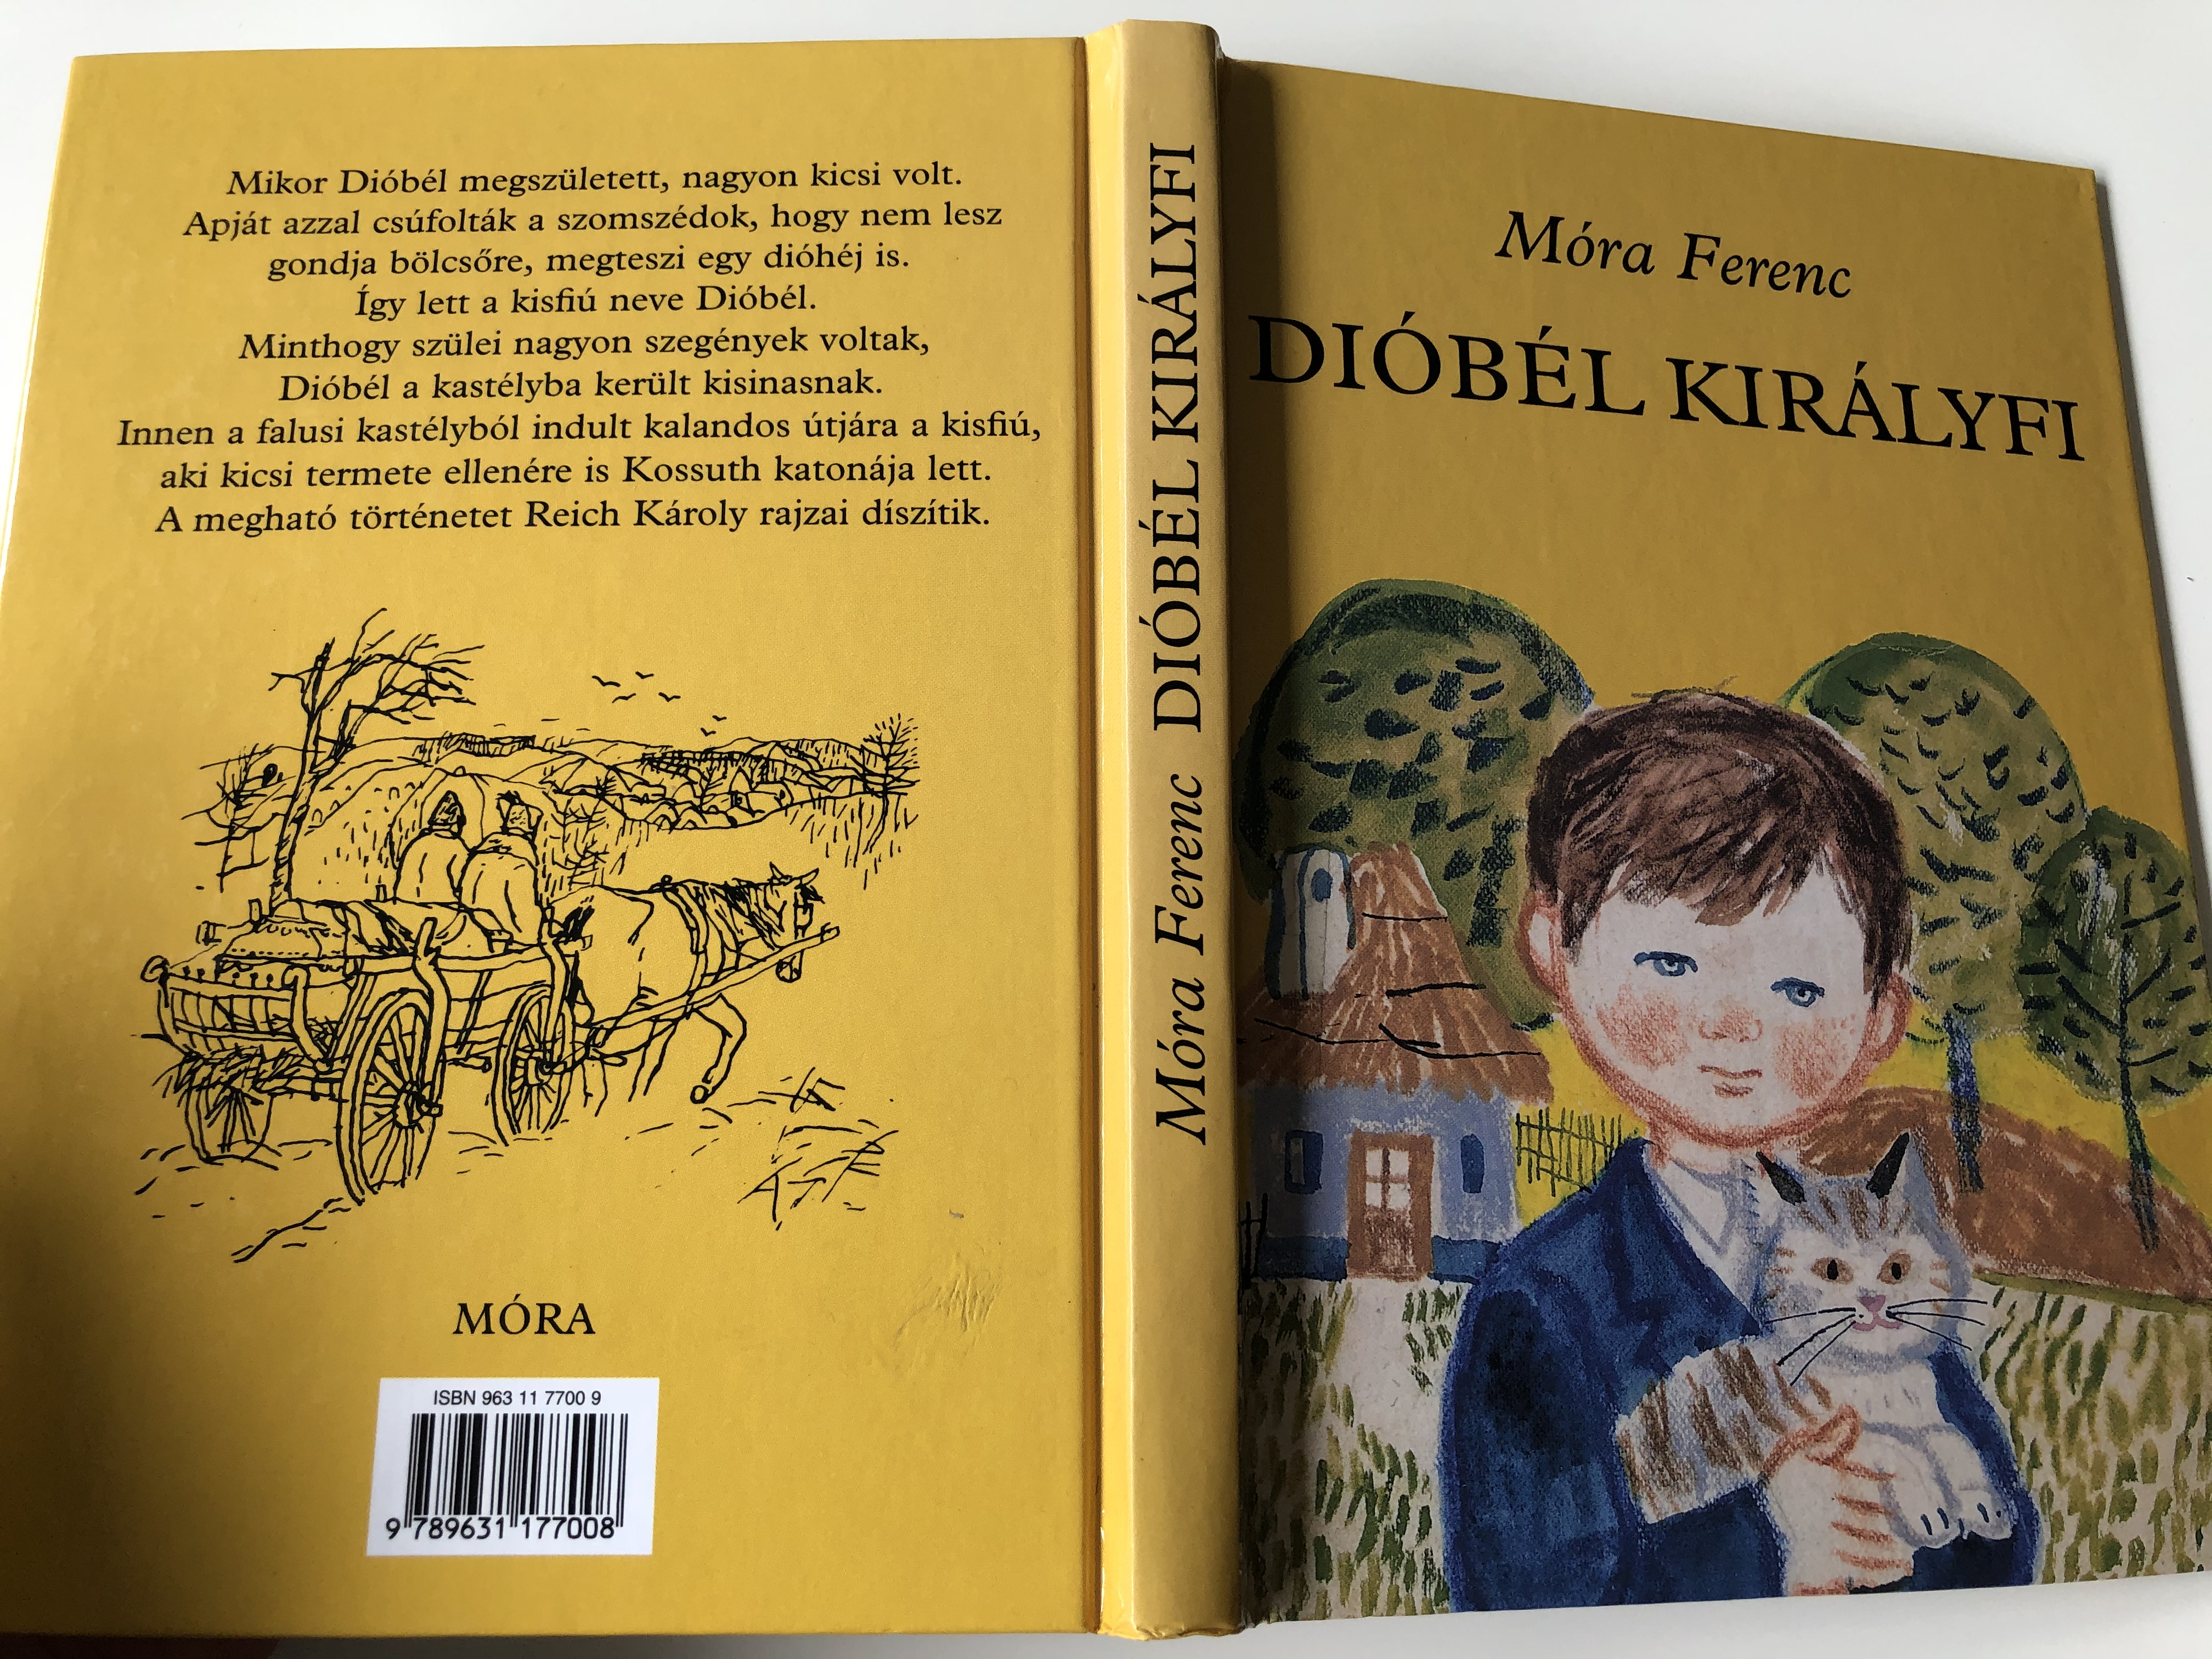 Dióbél királyfi by Móra Ferenc / Illustrated by Reich Károly rajzaival /  Móra könyvkiadó 2002 / 7th edition - hardcover - bibleinmylanguage